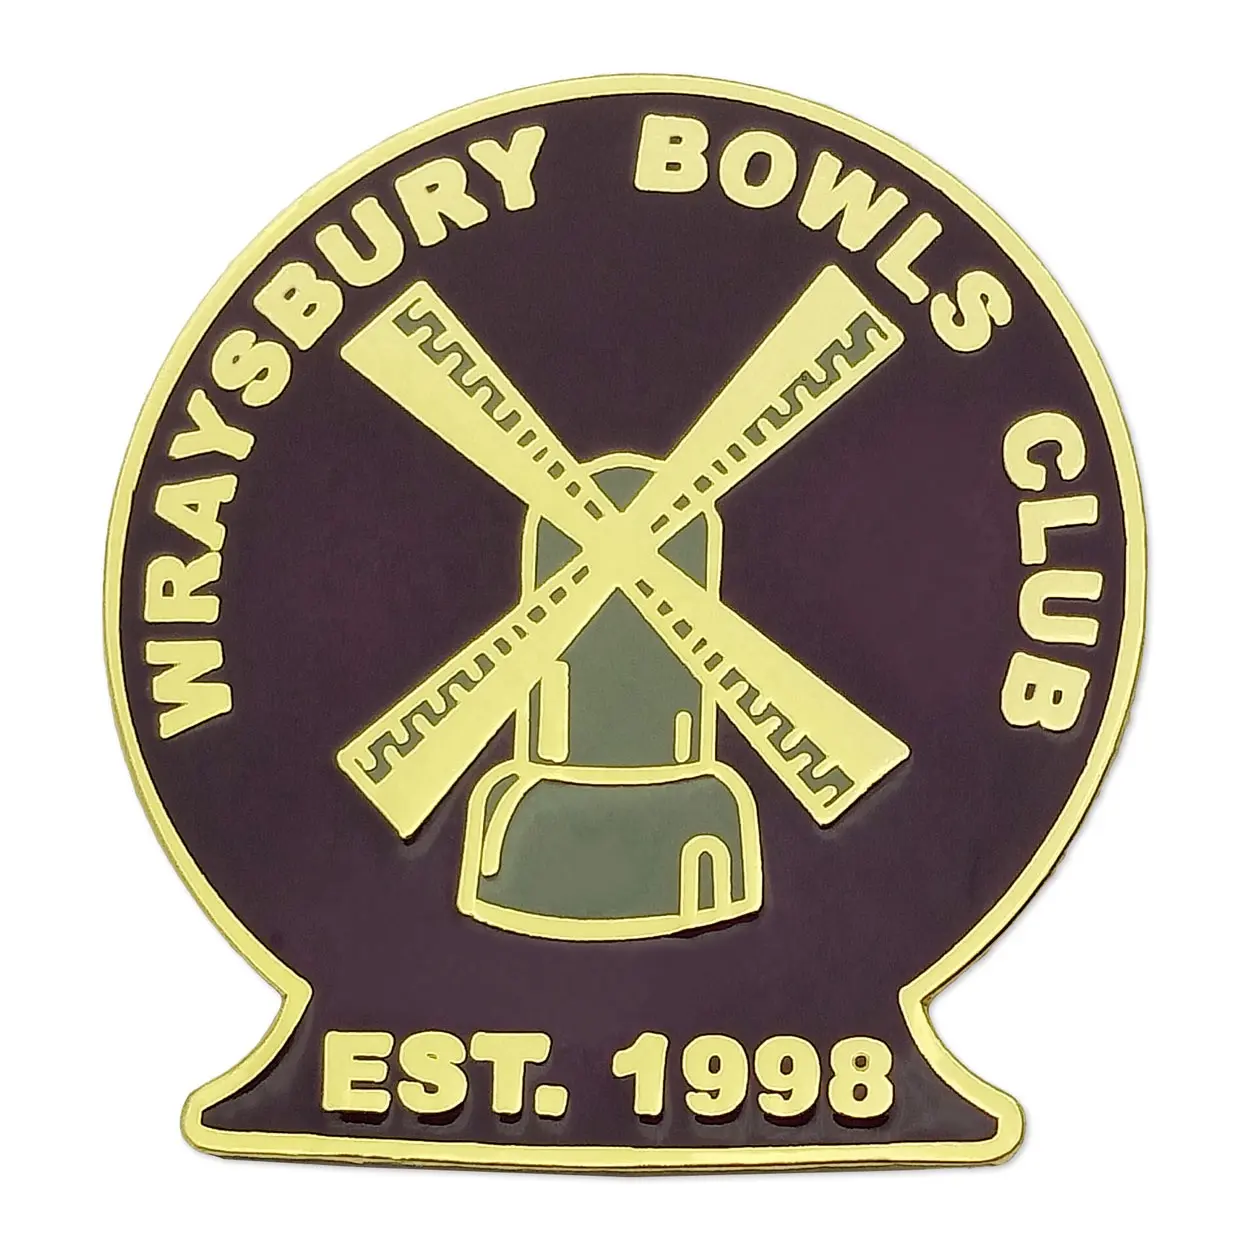 Logotipo personalizado Metal Design Hard Sports Wraysbury Bowls Clube Broches Emblemas Uniformes Esmaltes Lapelas Botão Pins